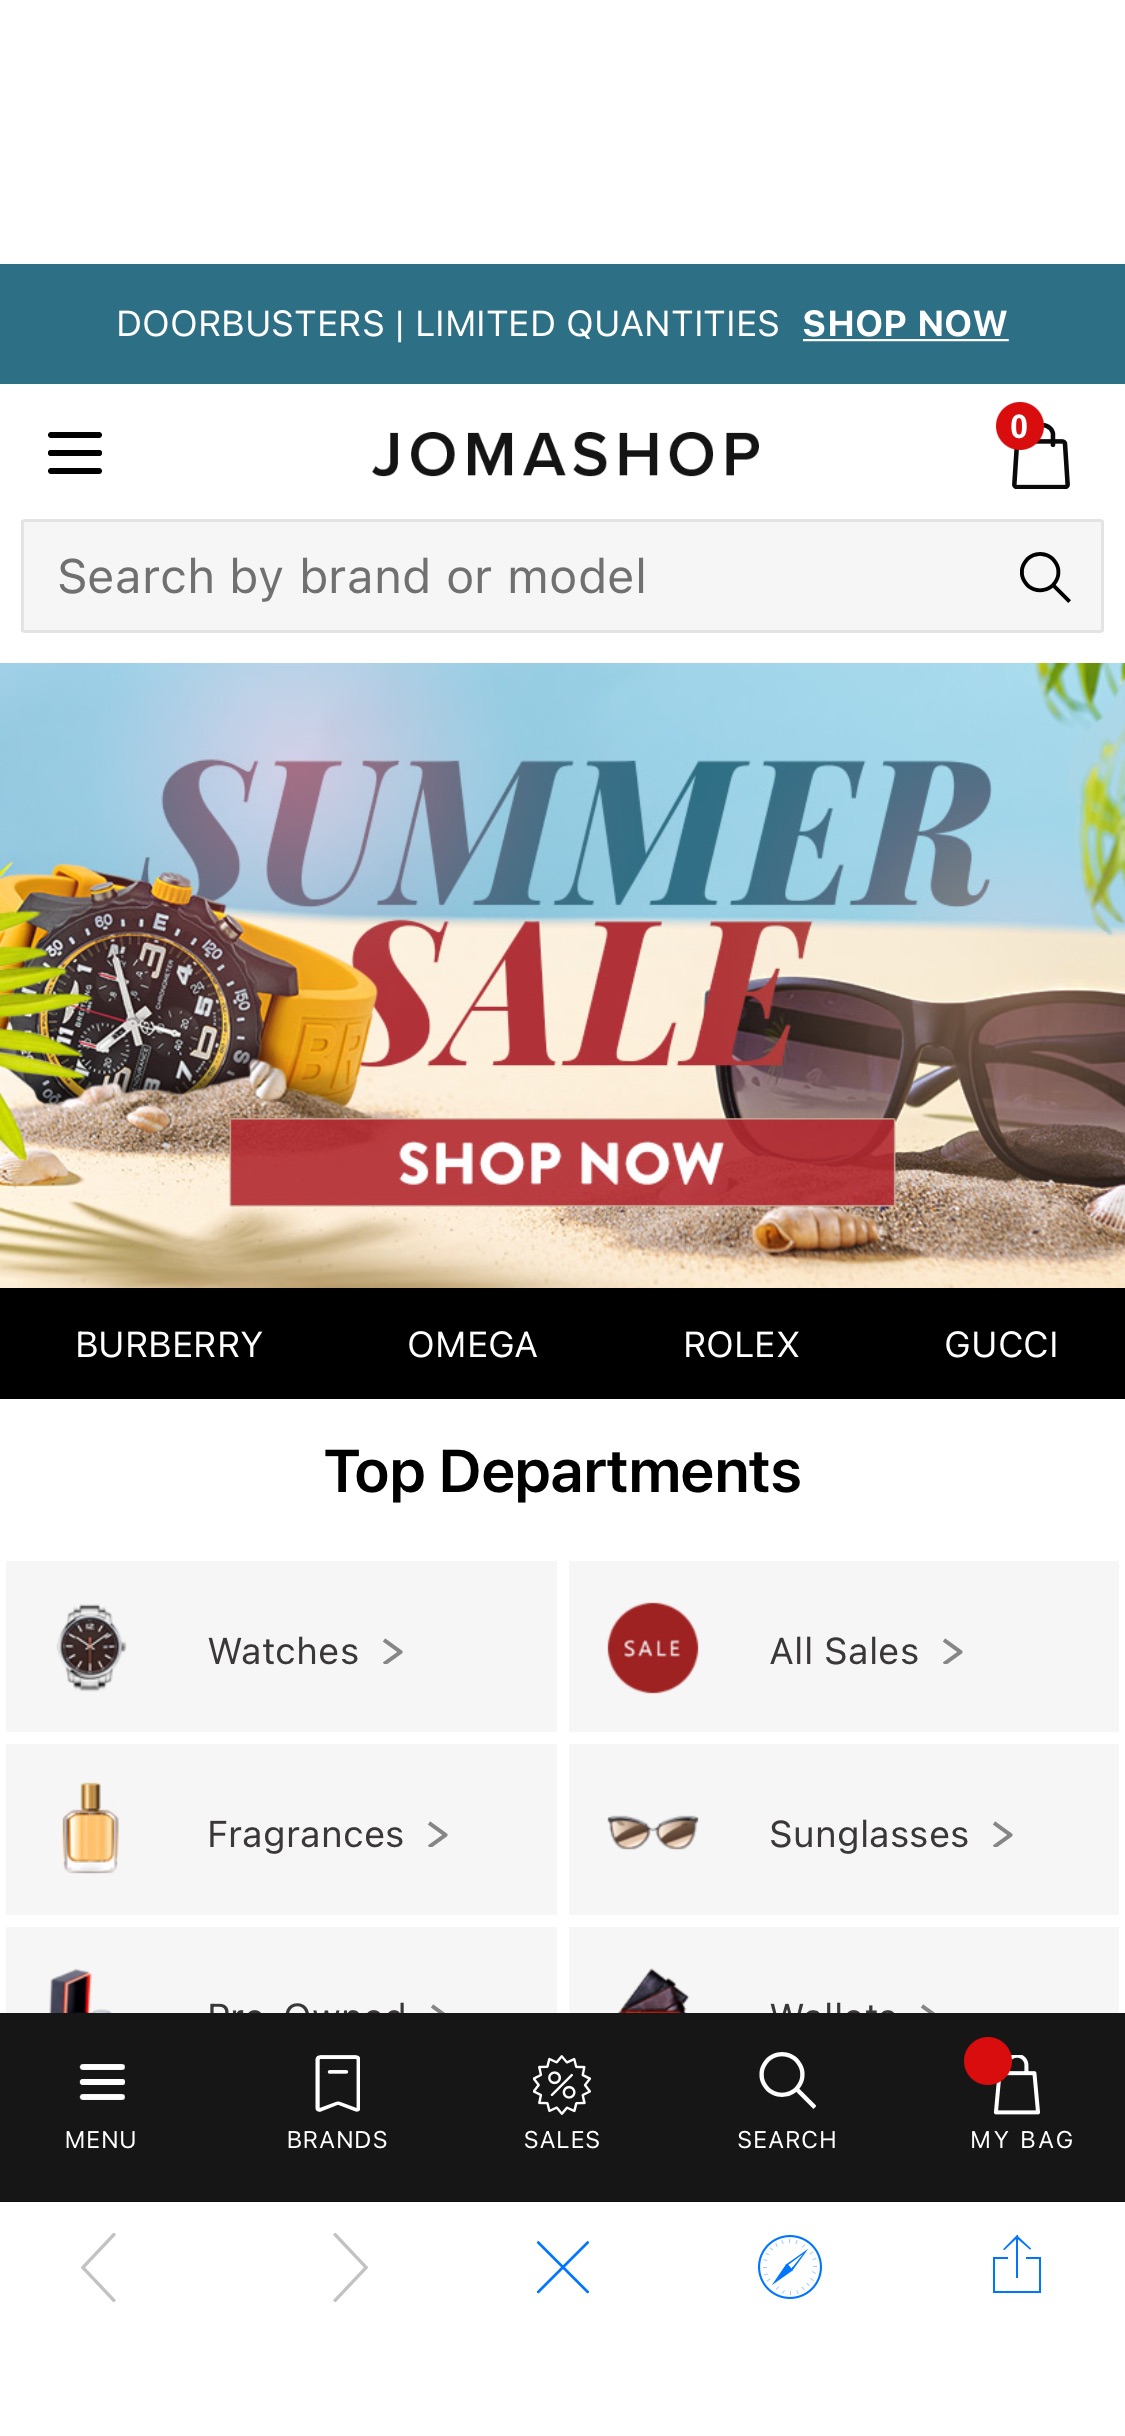 Jomashop.com: Online Shopping for Watches, Handbags, Sunglasses, Apparel, Beauty, Shoes, Pens & more - Jomashop
夏日大促最后机会！Montblanc、IWC、Orient等手表低至3.6折，古驰、Lacoste、Armani等墨镜低至2.5折